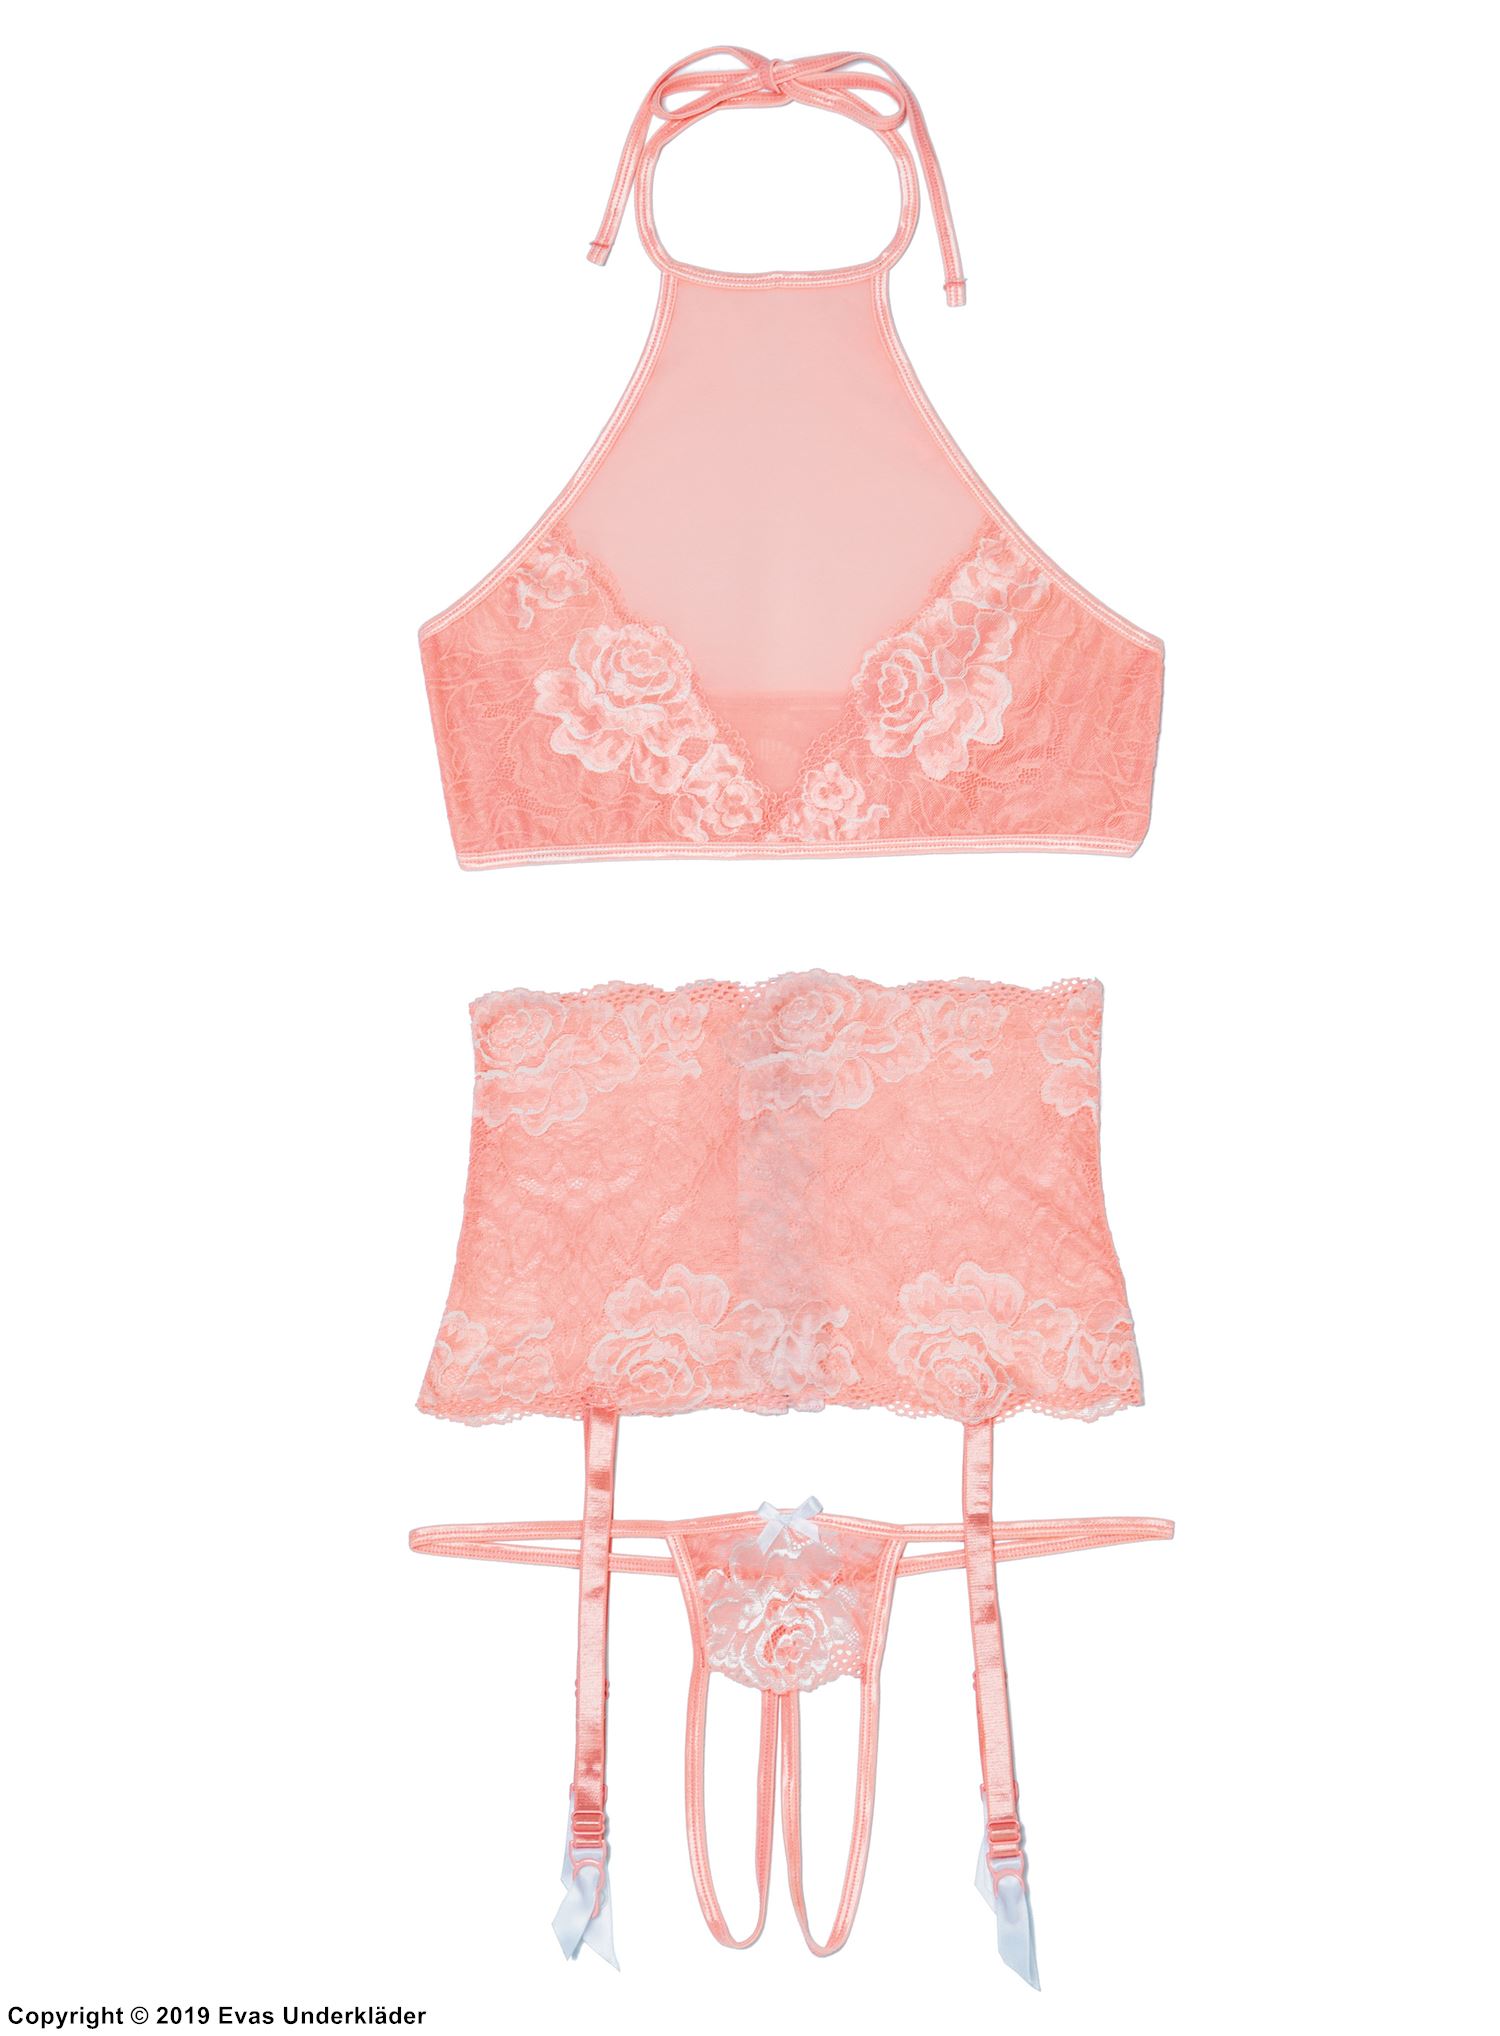 Romantic lingerie set, sheer mesh and lace, halterneck, open crotch, garter belt